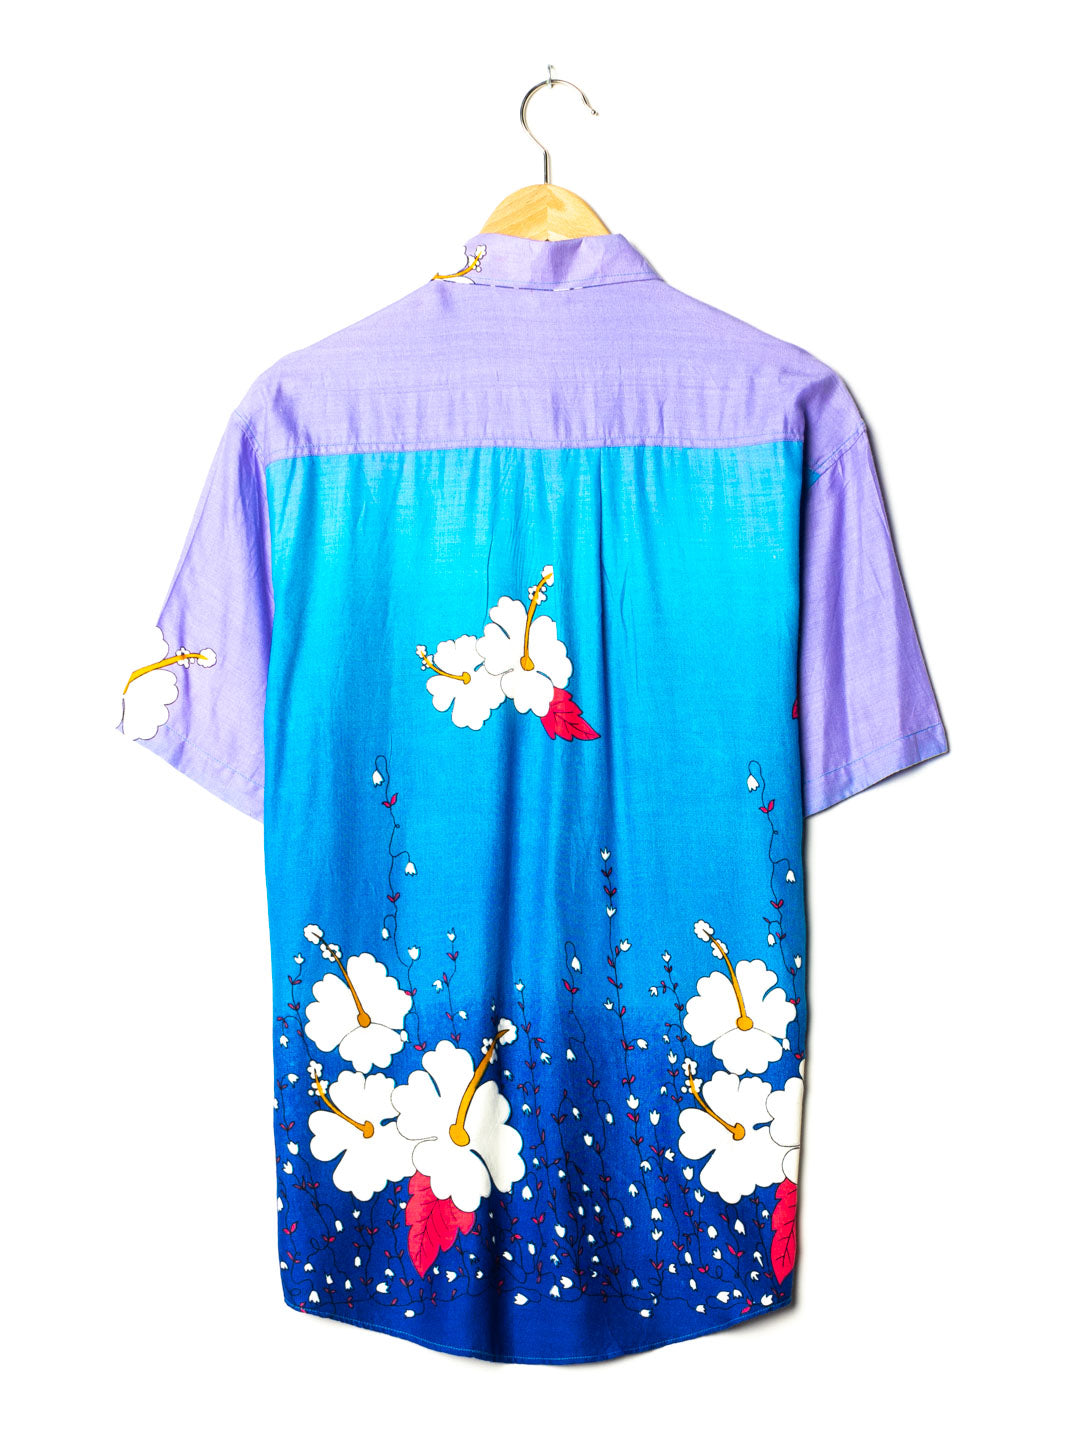 Vinokilo Blue Hawaiian Shirt